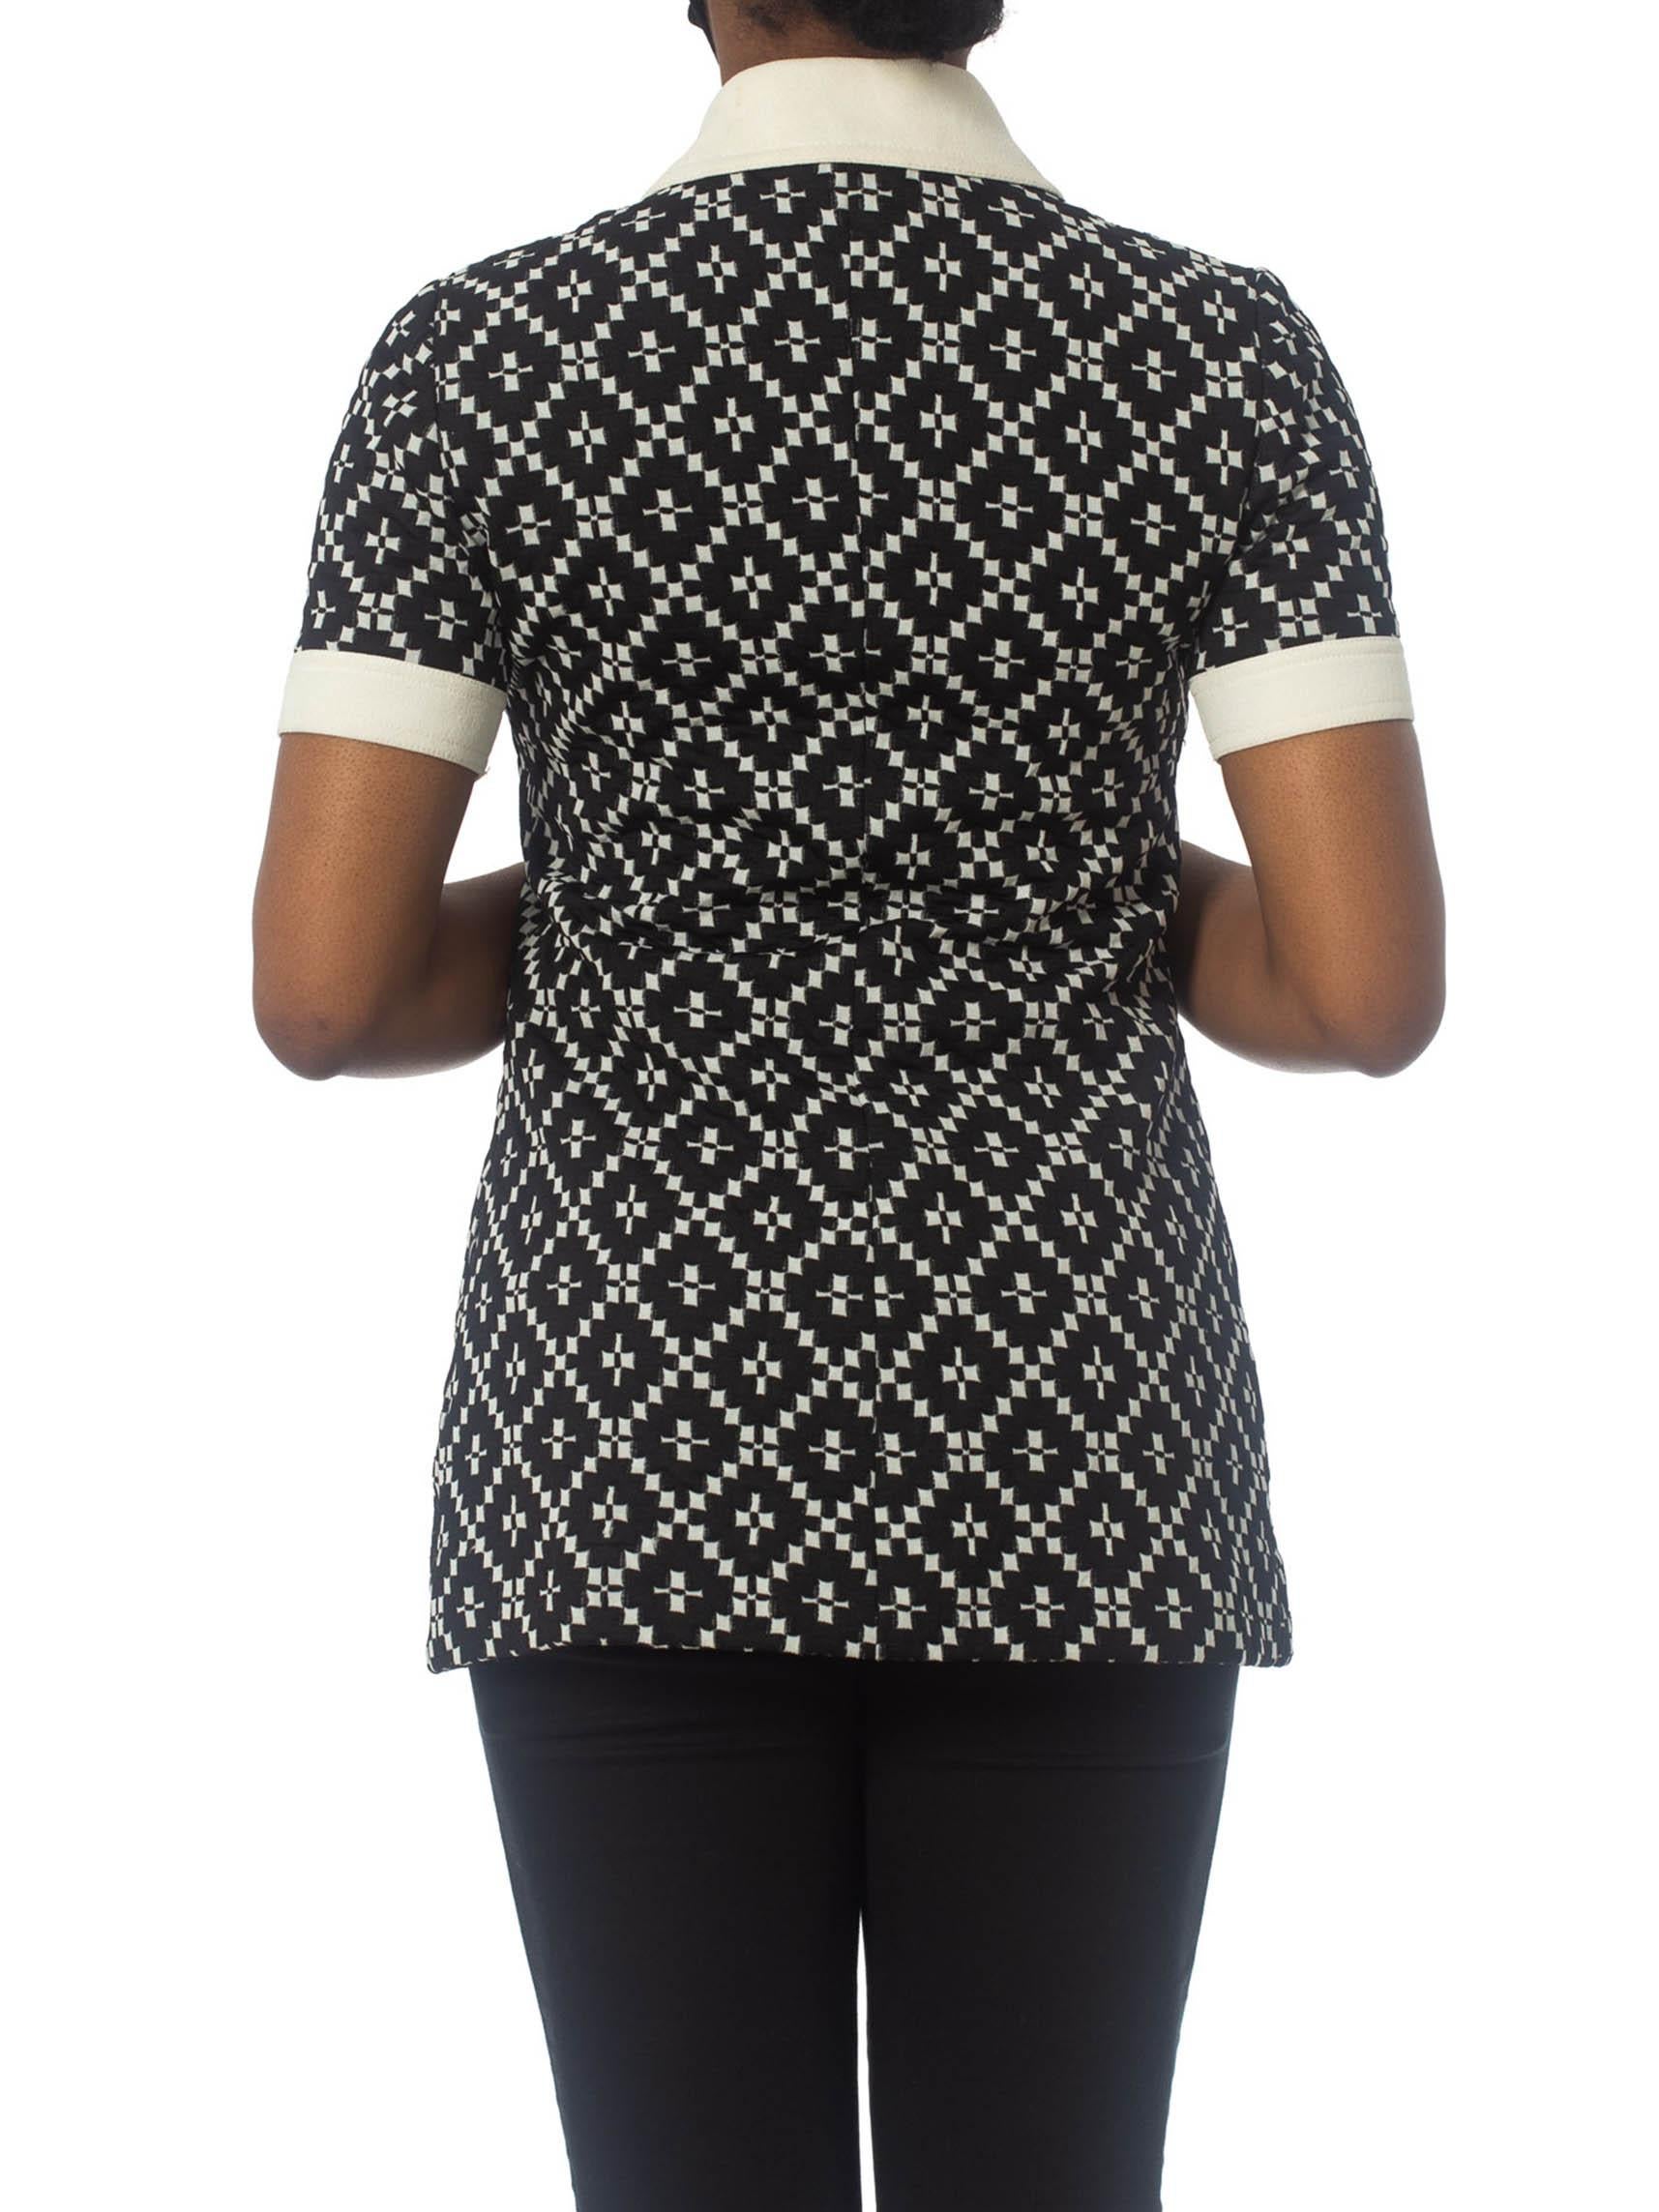 Schwarz-weißes Polyester-Jaquard-Strick-Op-Art Micro Mini-Dress-Tunika-Oberteil aus den 1960er Jahren Damen